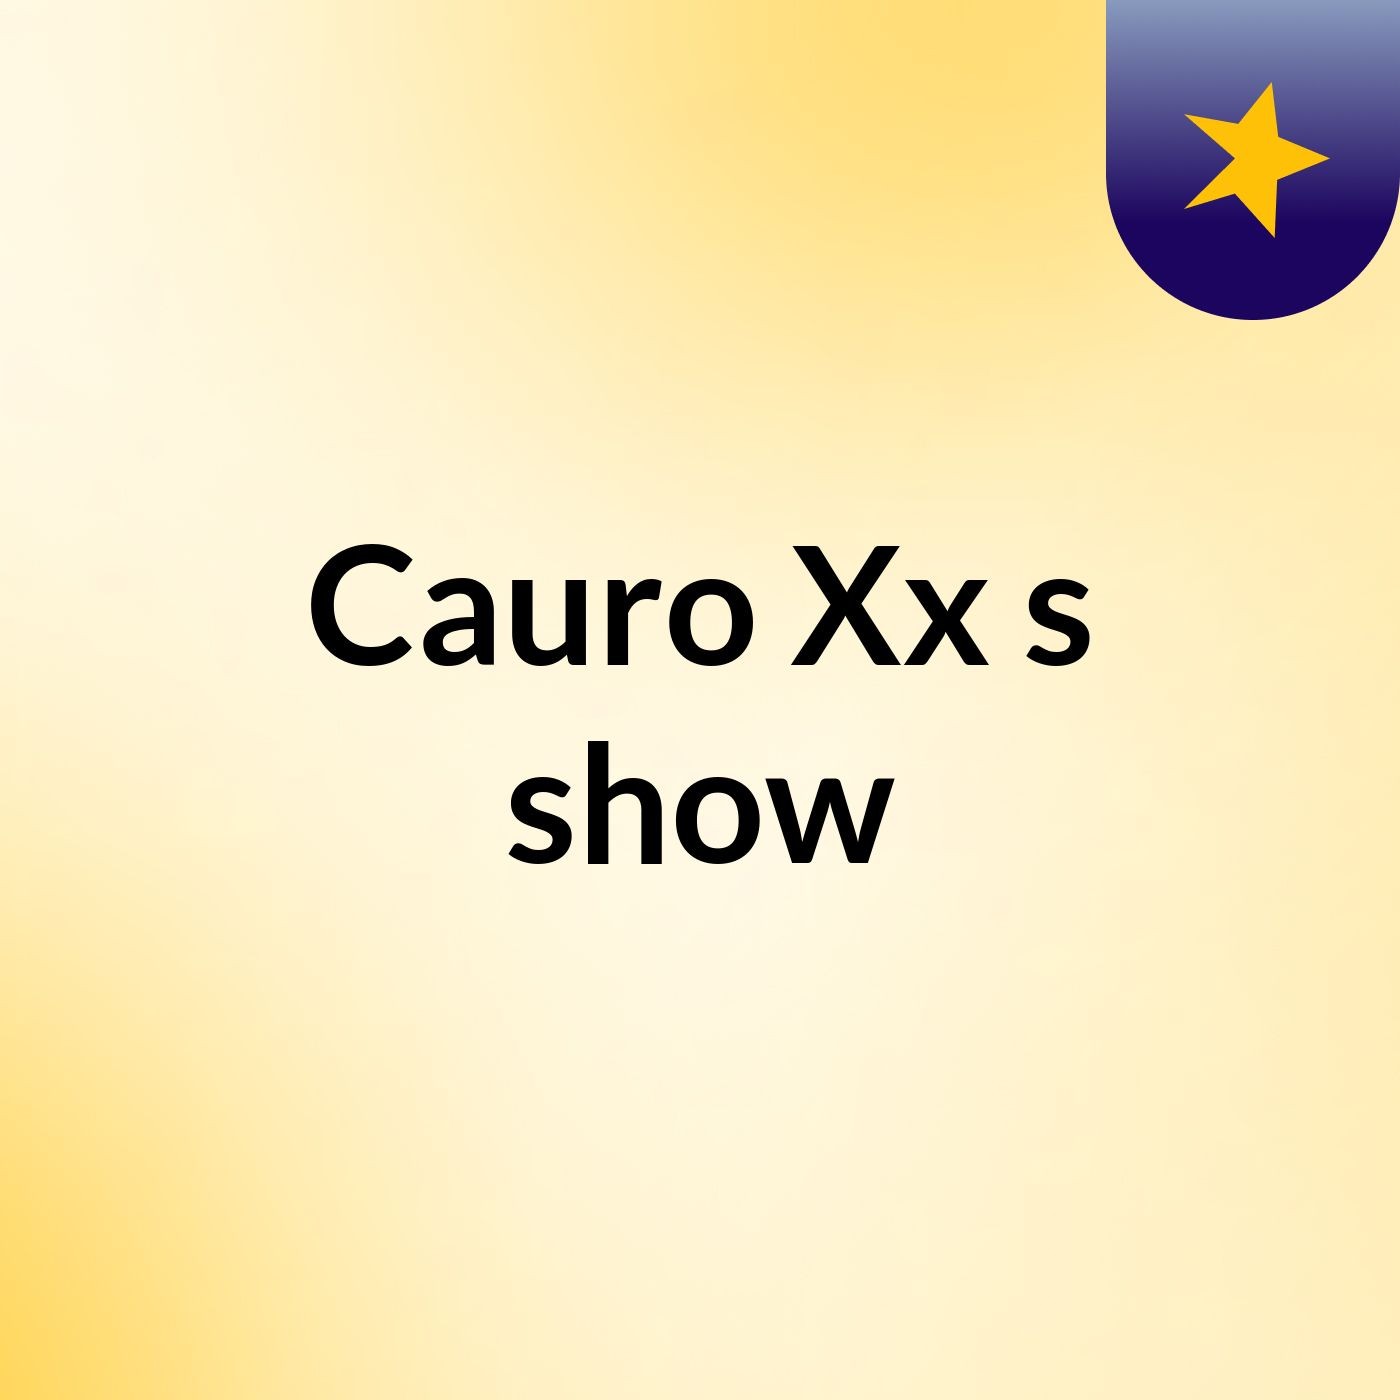 Cauro Xx's show